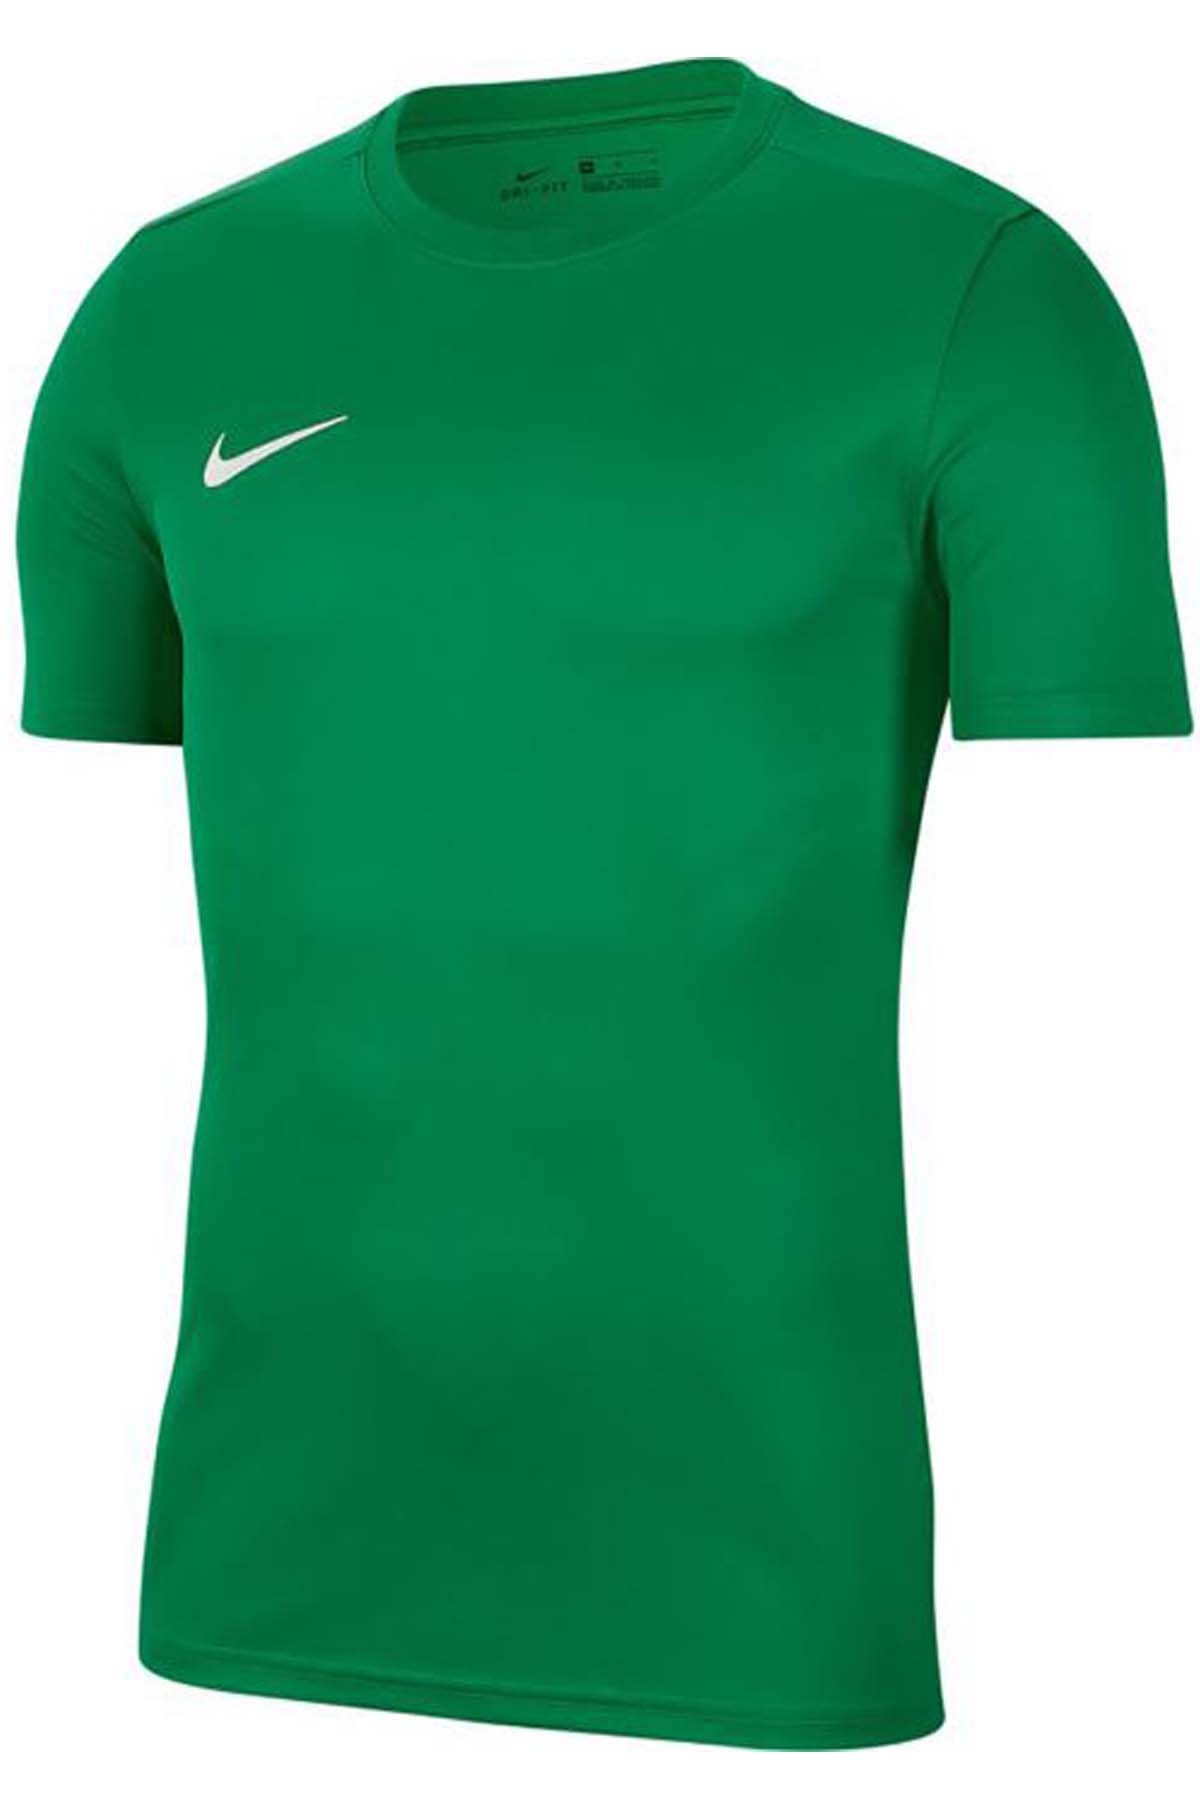 Nike Dry Park Vıı Jsy Ss Erkek Tişört Bv6708-302